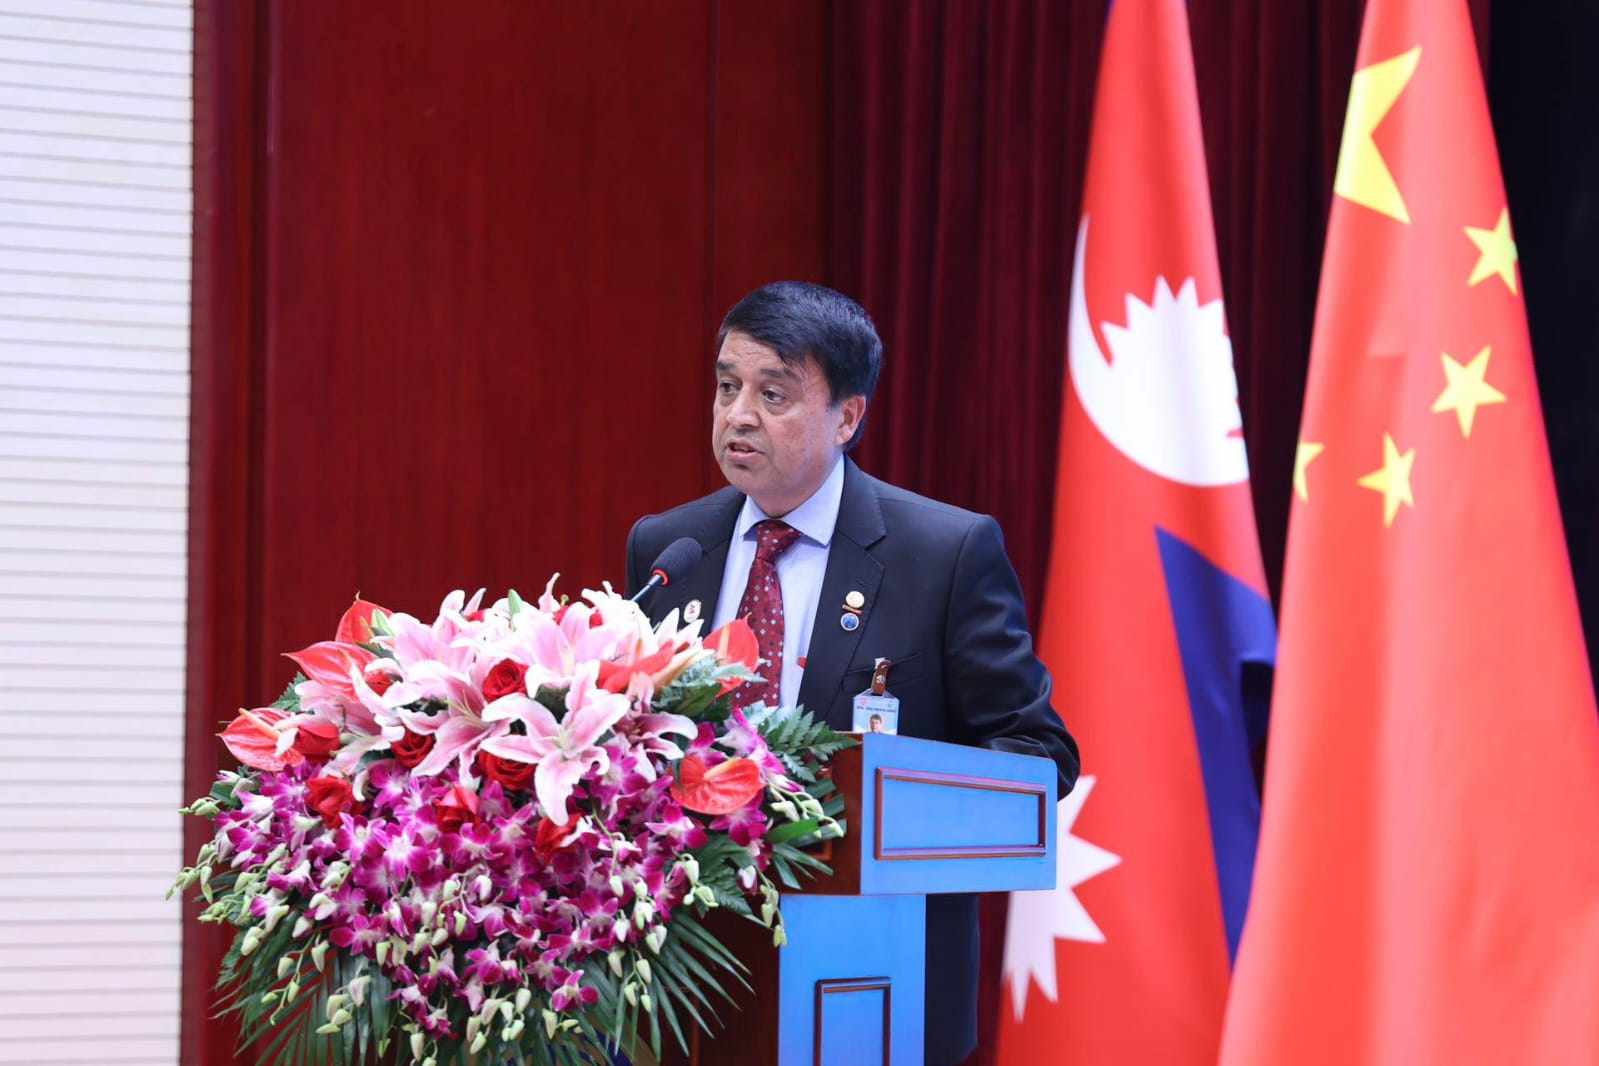 FNCCI president highlights thriving Nepal-China economic ties at Nepal-China Business Summit